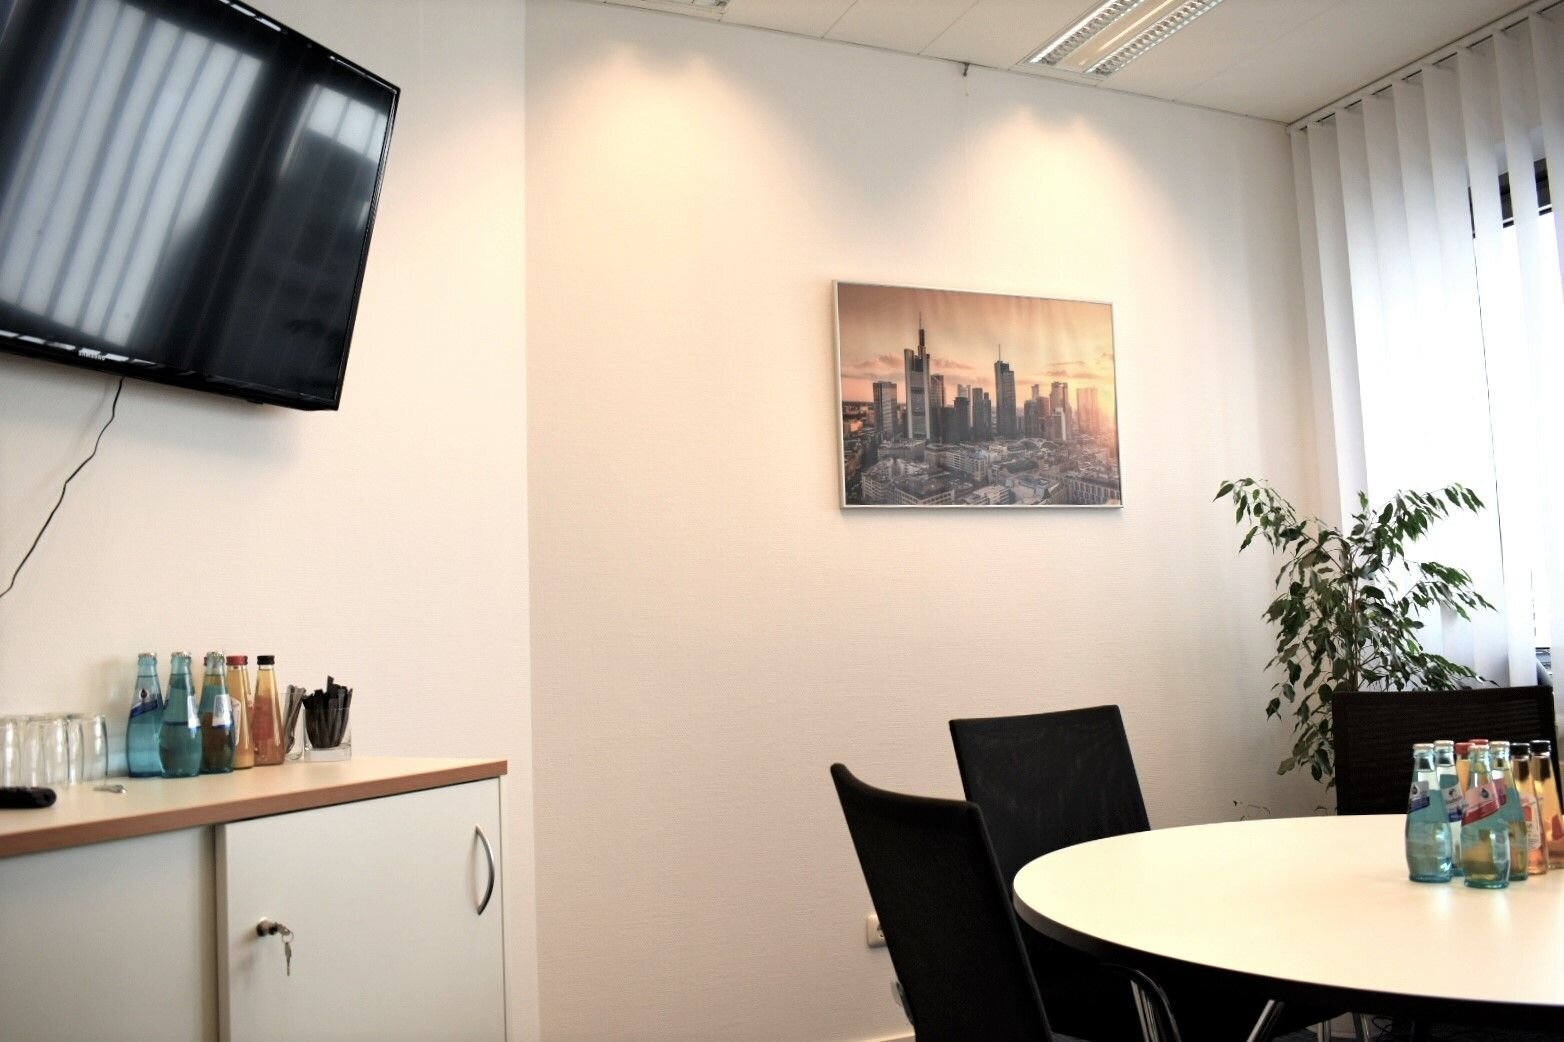 Bilder o&m offices & more GmbH & Co. KG